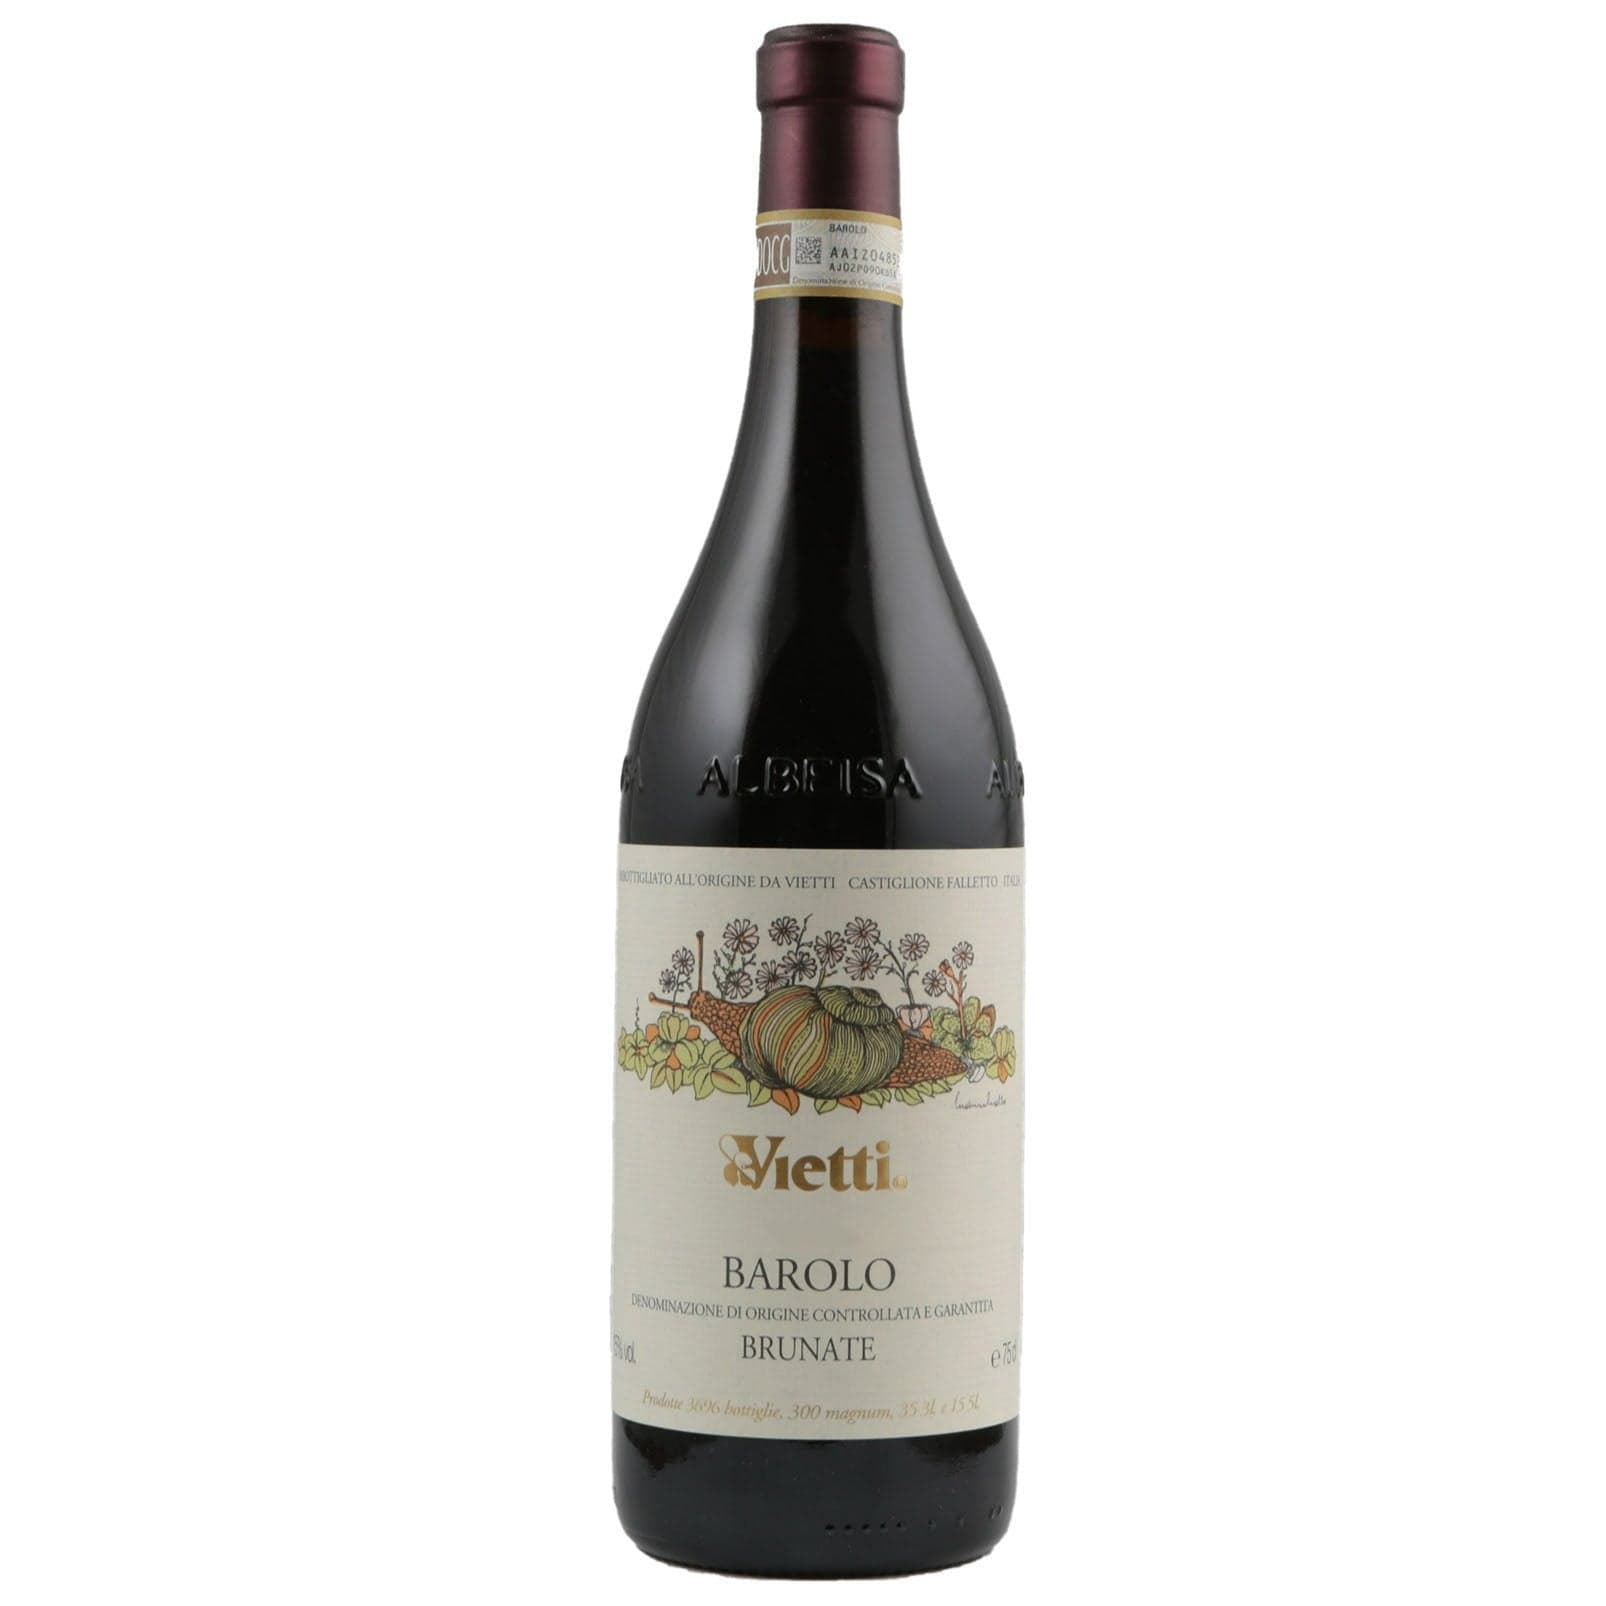 Single bottle of Red wine Vietti, Brunate, Barolo, 2007 100% Nebbiolo